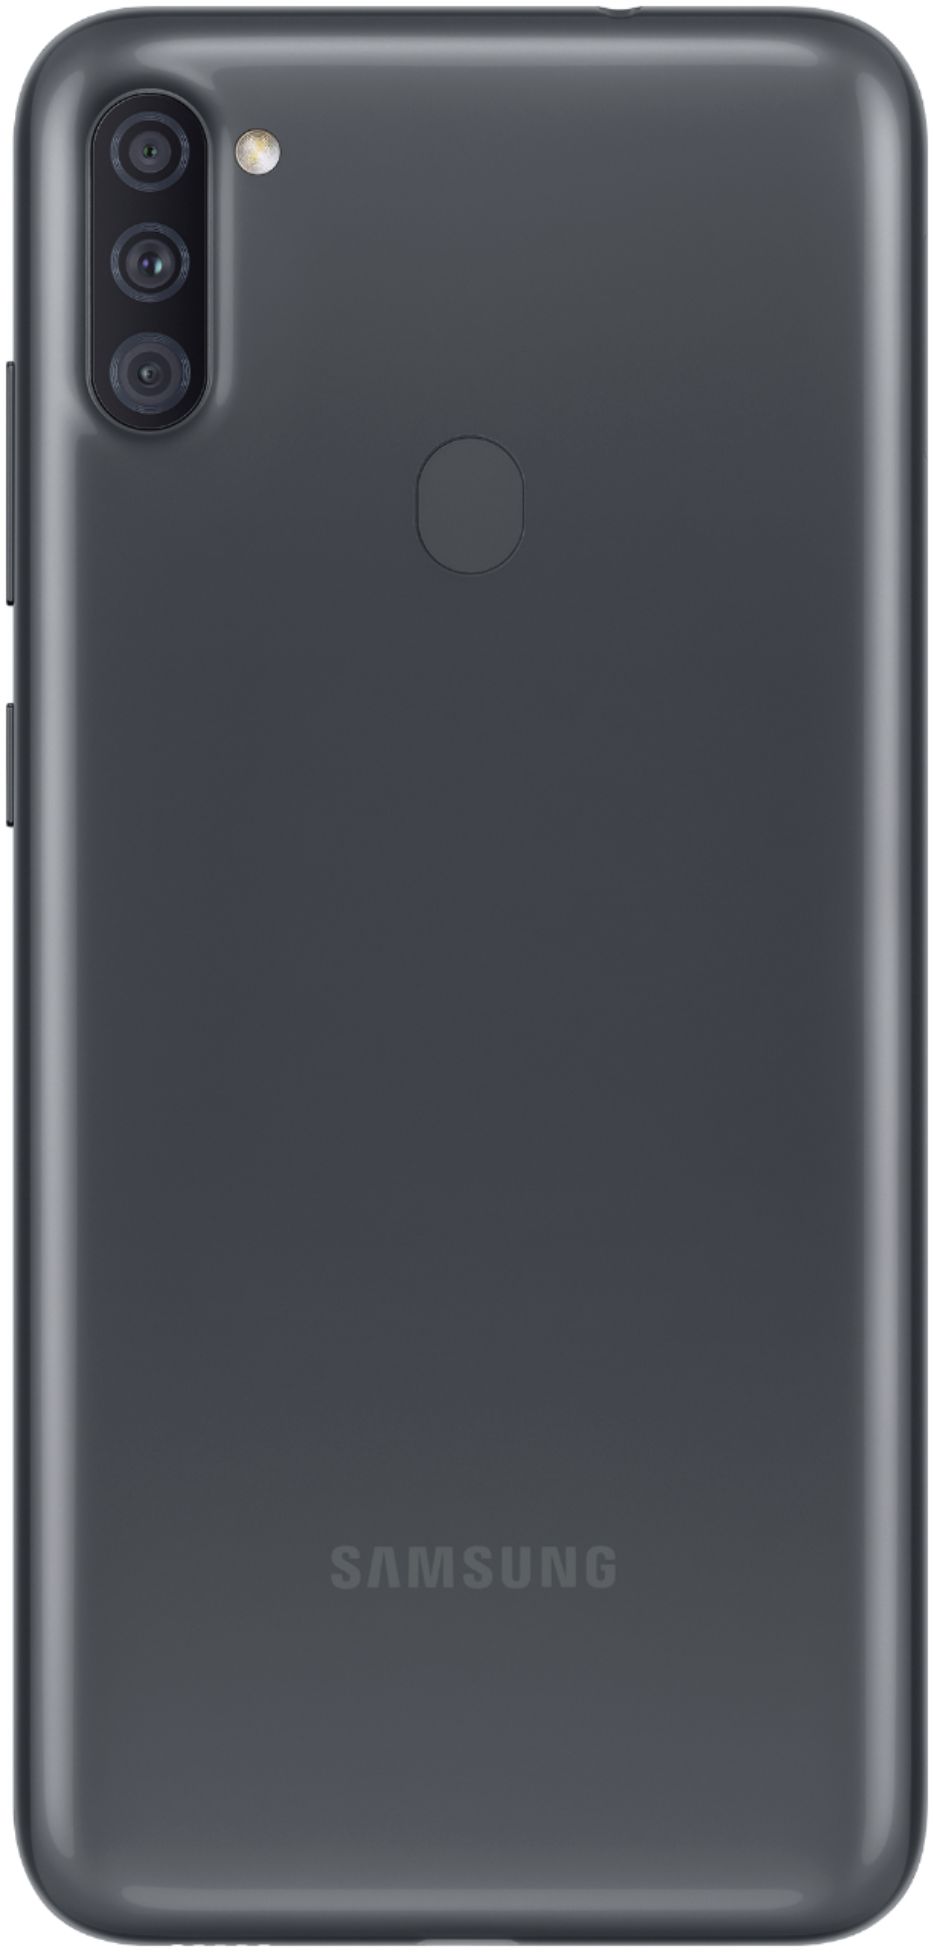 Back View: TRACFONE - TracFone Samsung Galaxy A11 Prepaid